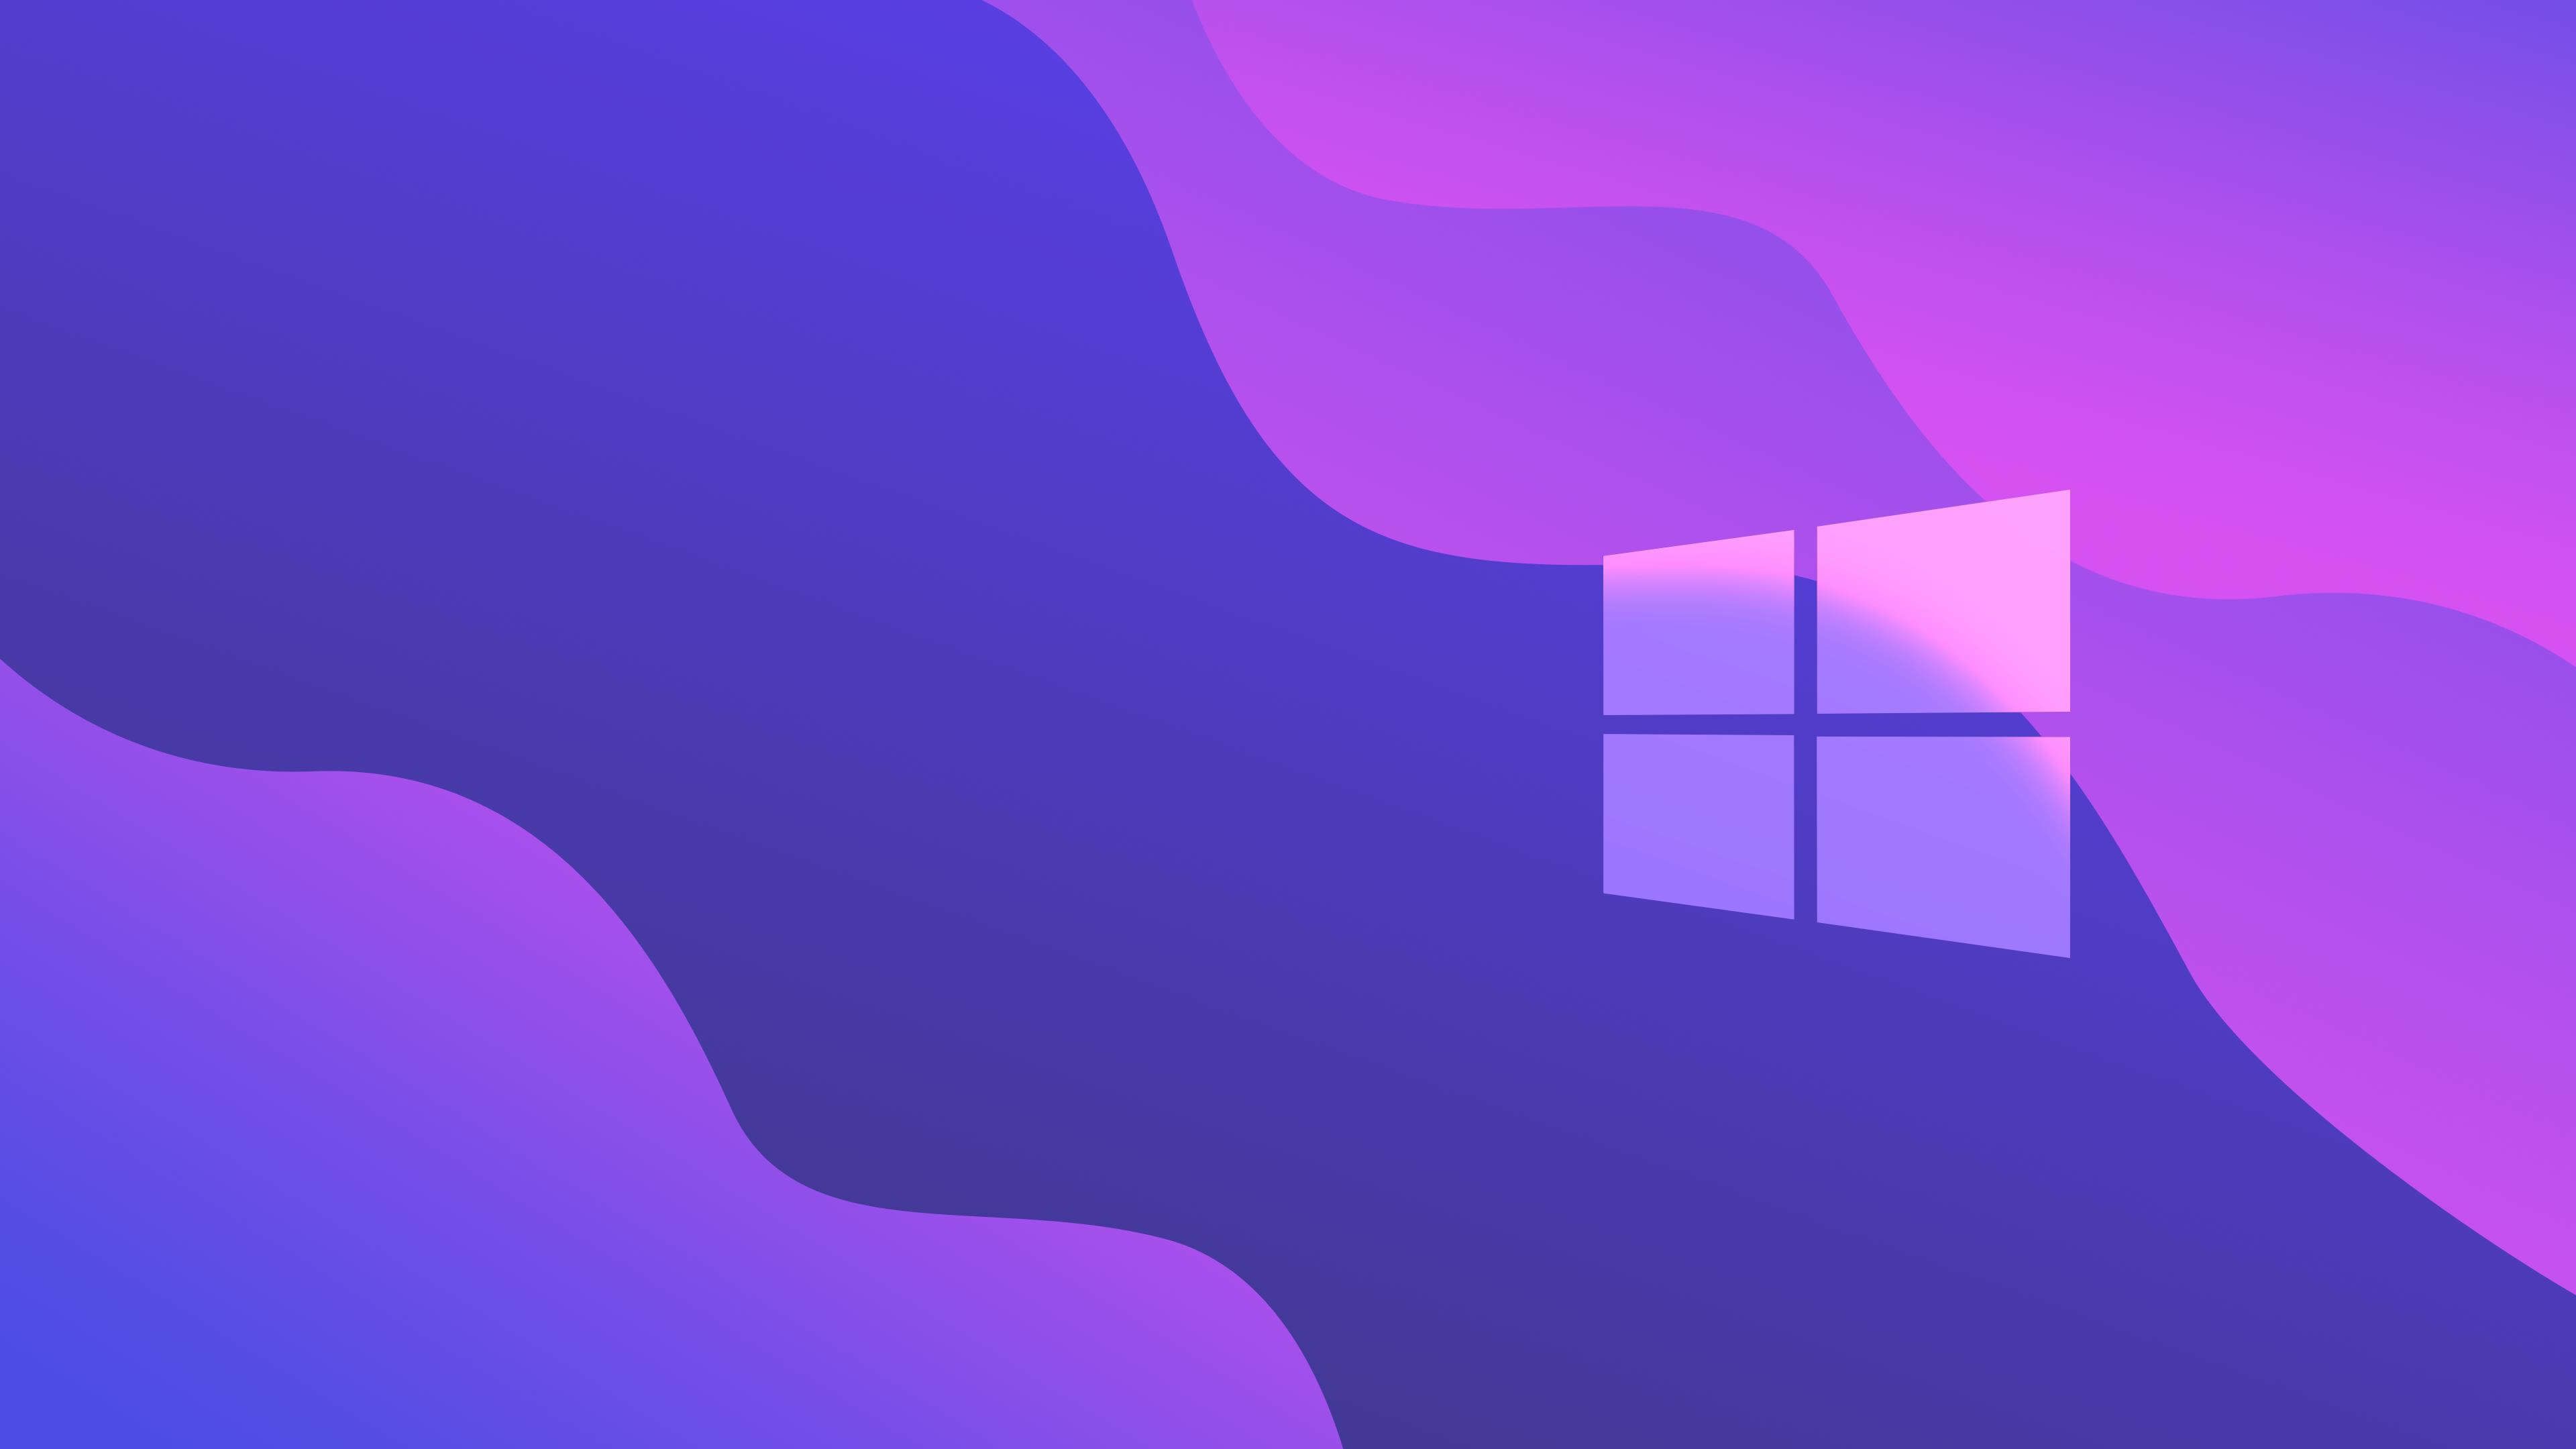 Windows 10 Purple Gradient Wallpaper, HD Minimalist 4K Wallpaper, Image, Photo and Background